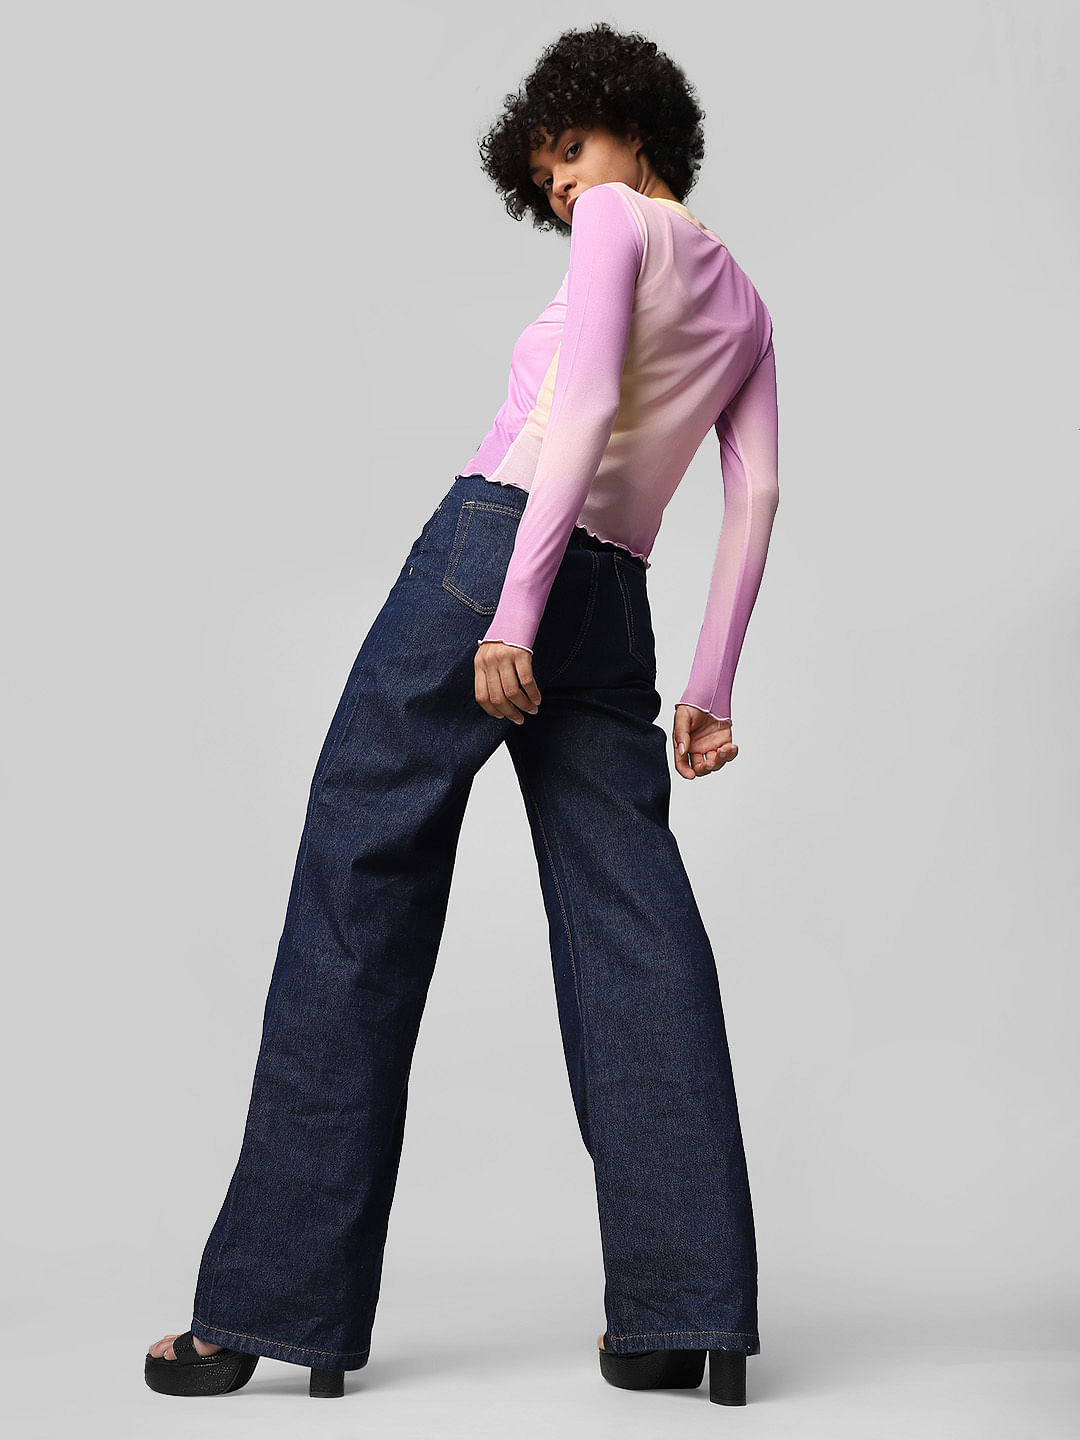 Wide-leg denim jeans pants, womens wide-leg pants, denim trousers, blue  jeans pants, Jeans for Muslim Women | alsharifa.com